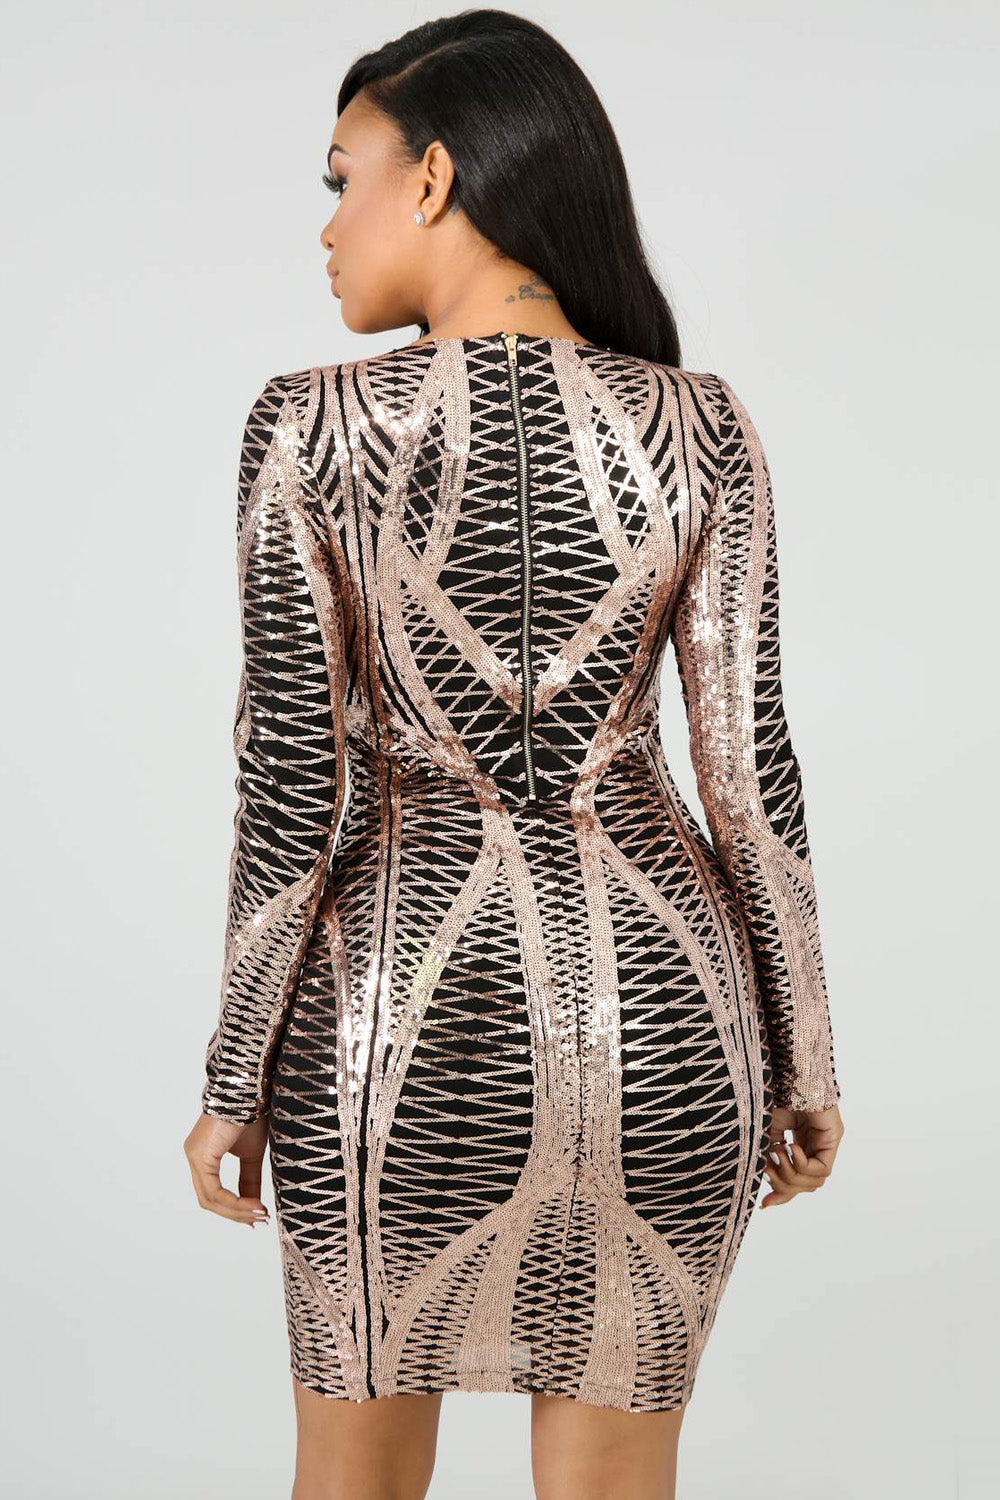 goPals metallic print long sleeve bodycon dress. 